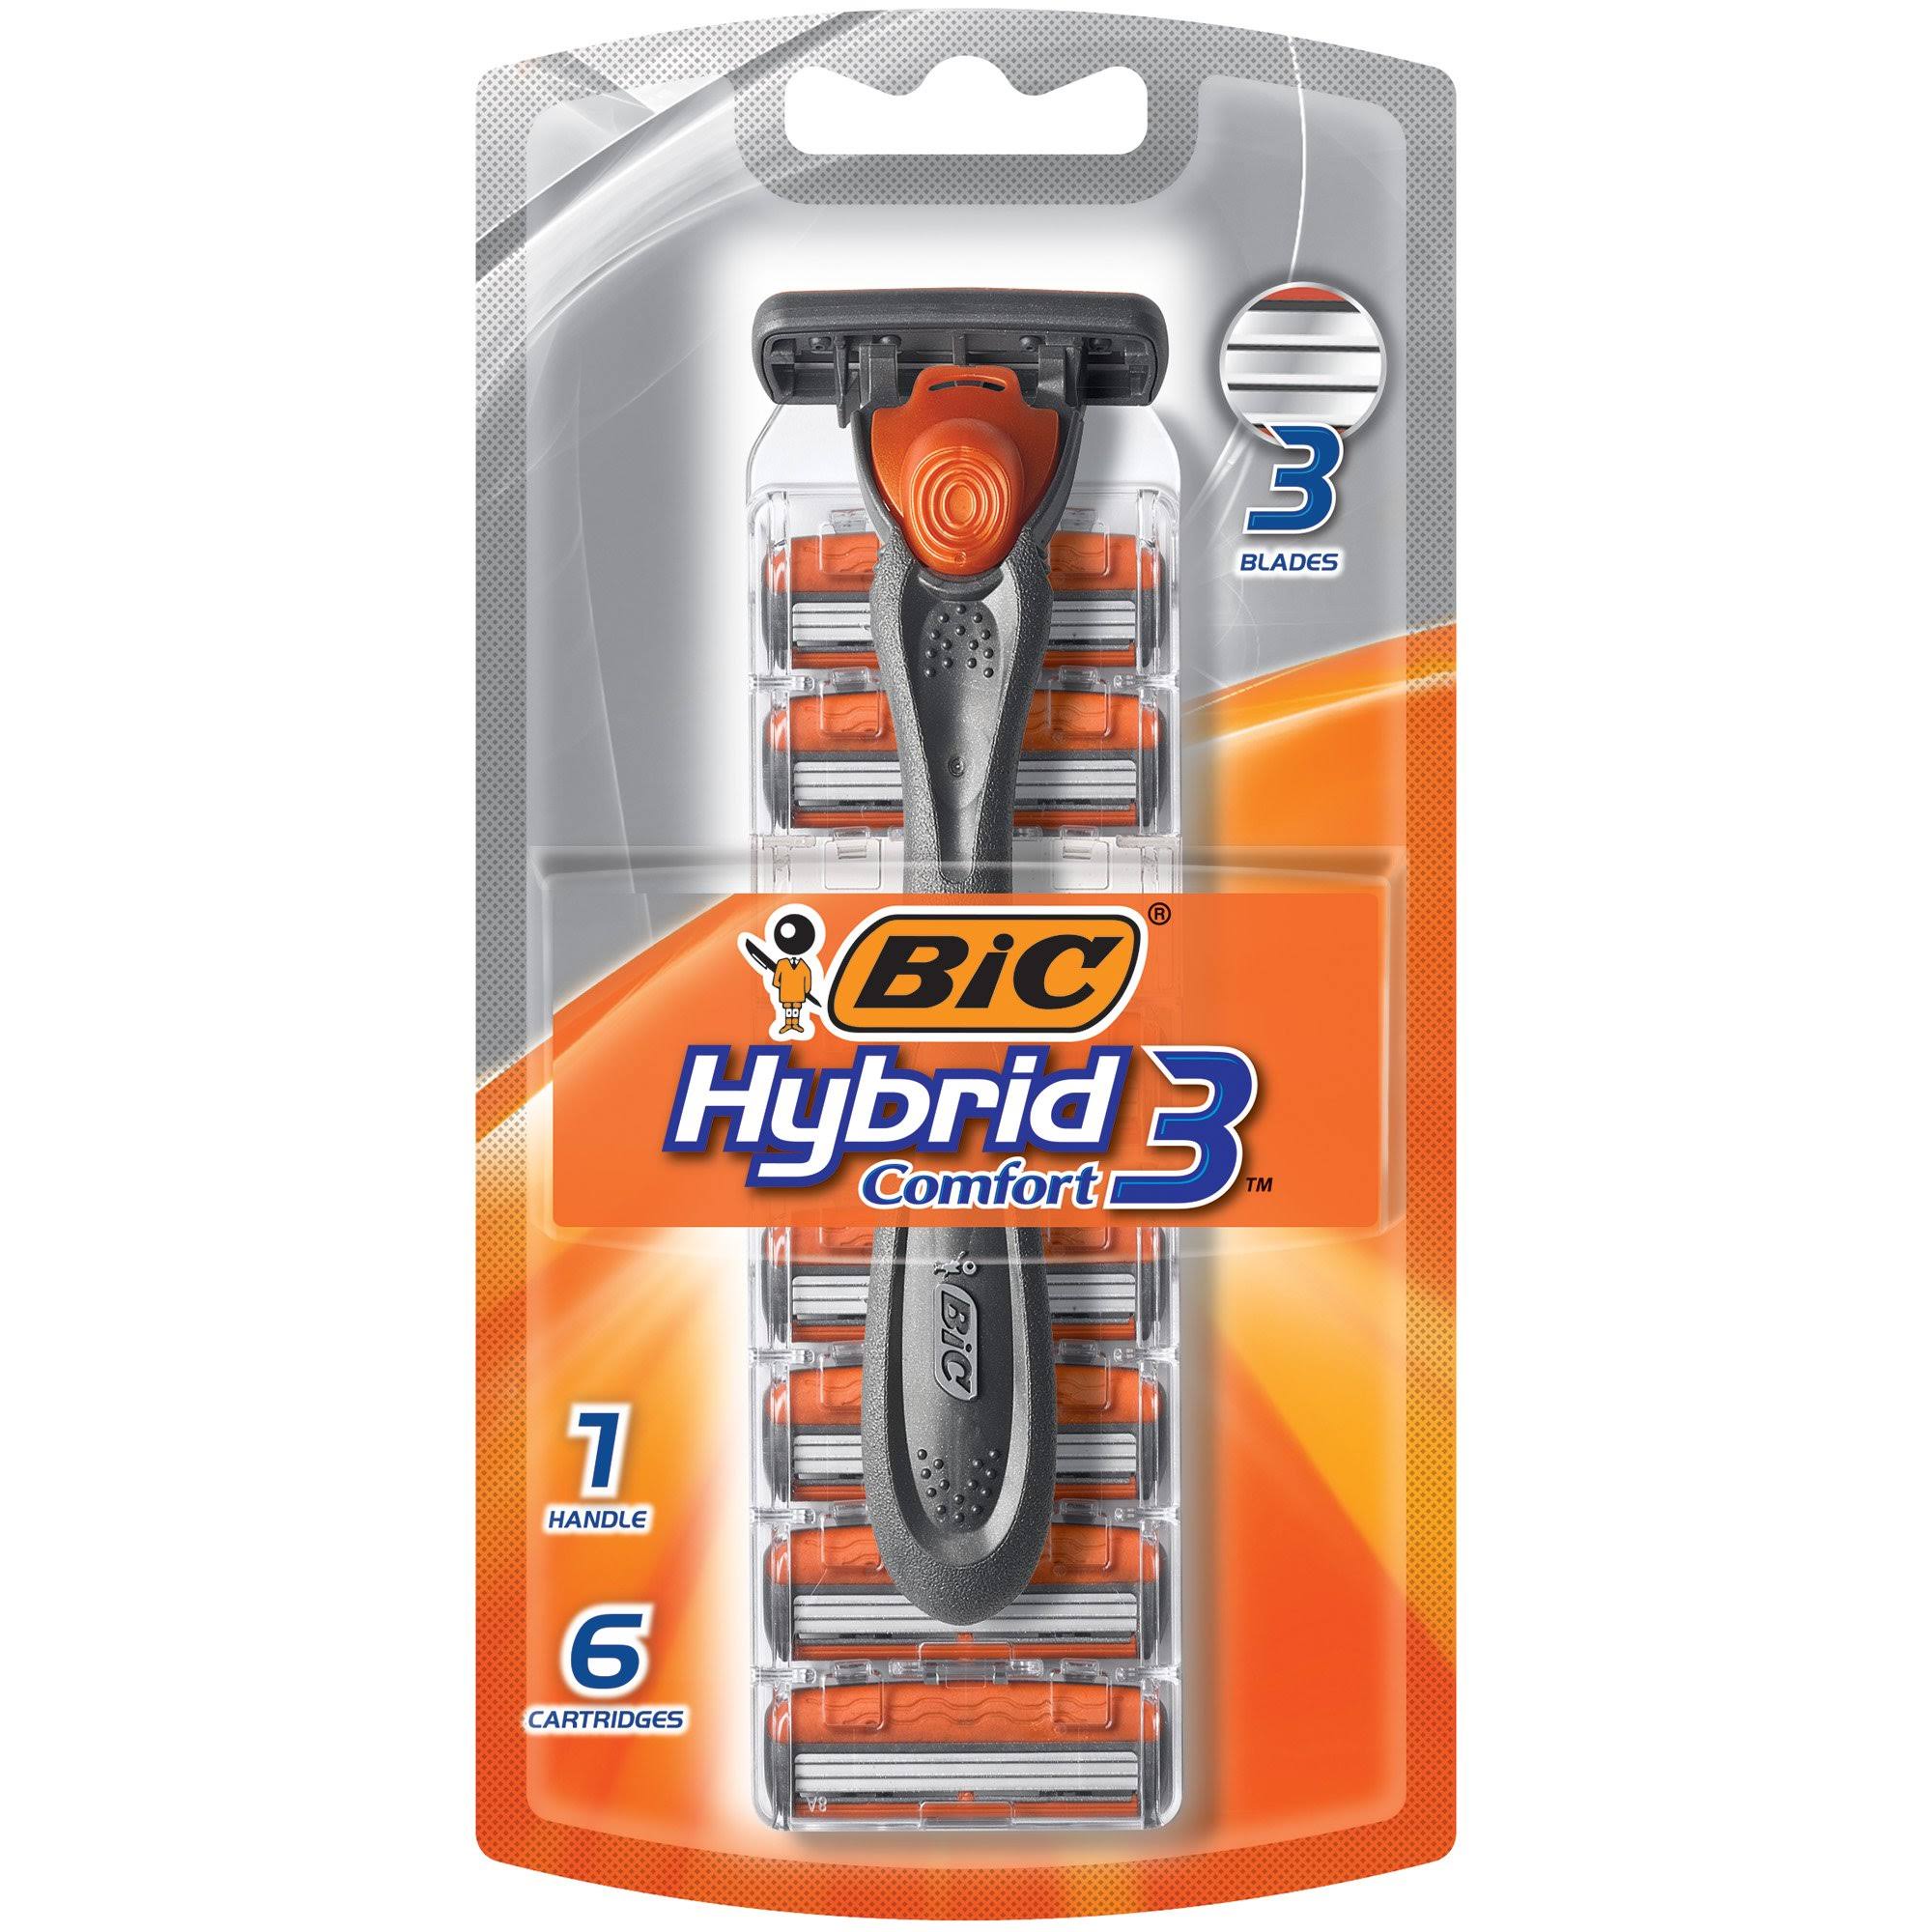 BIC 7-Piece Hybrid 3 Comfort Disposable Men's Razor